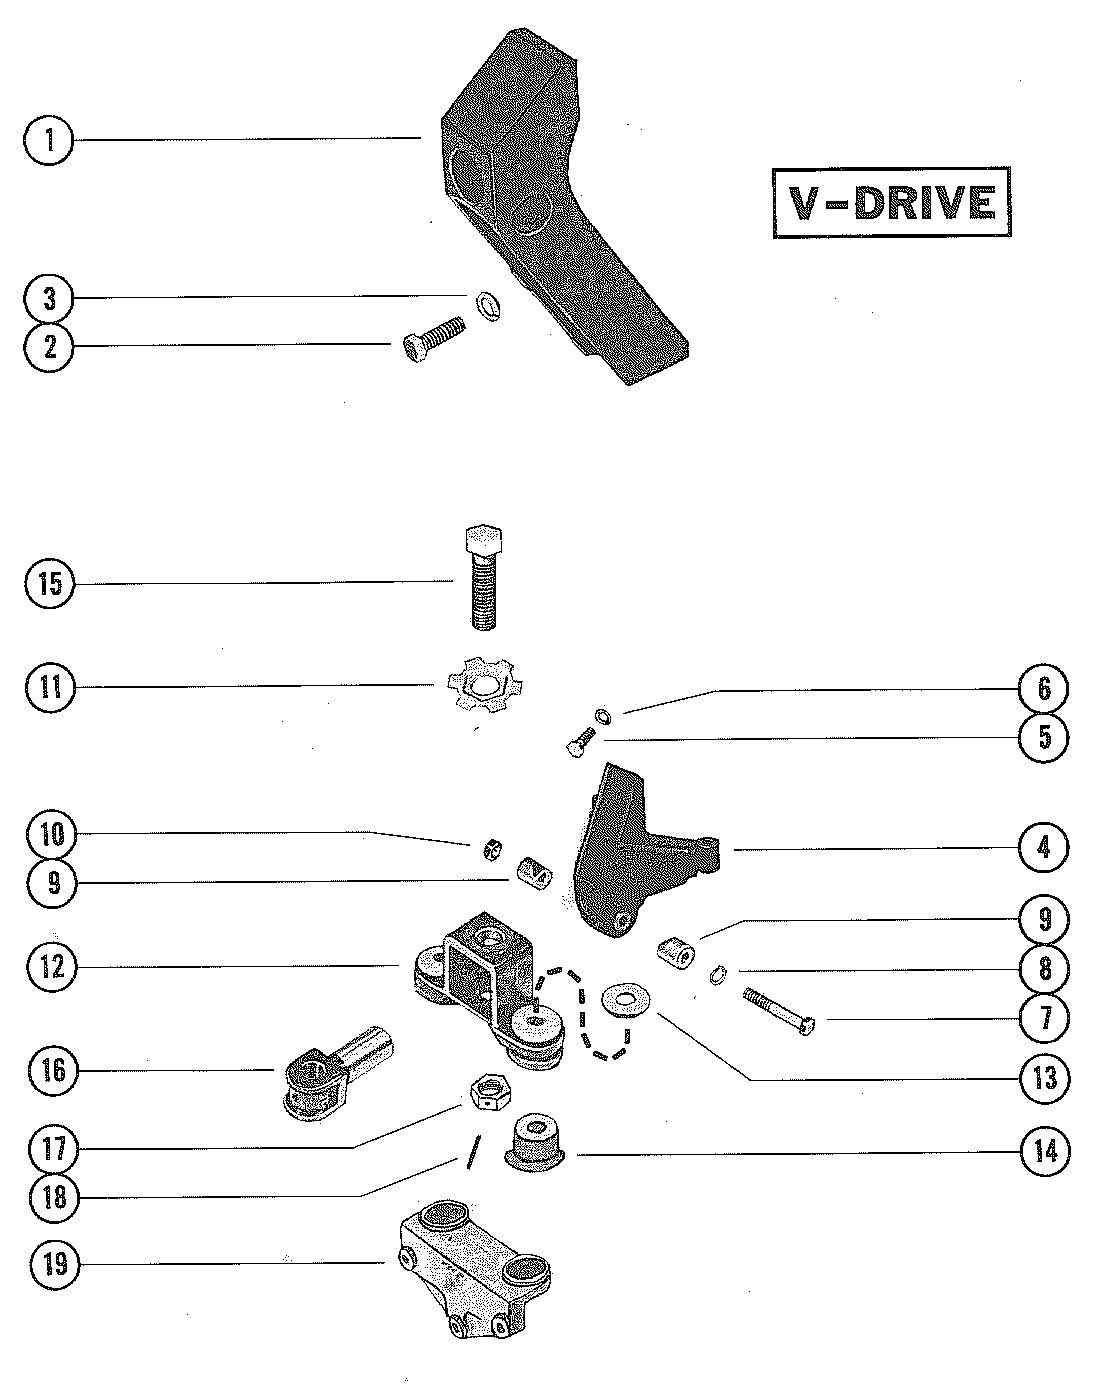 MERCRUISER 255 ENGINE TRANSMISSION AND ENGINE MOUNTING (V-DRIVE)